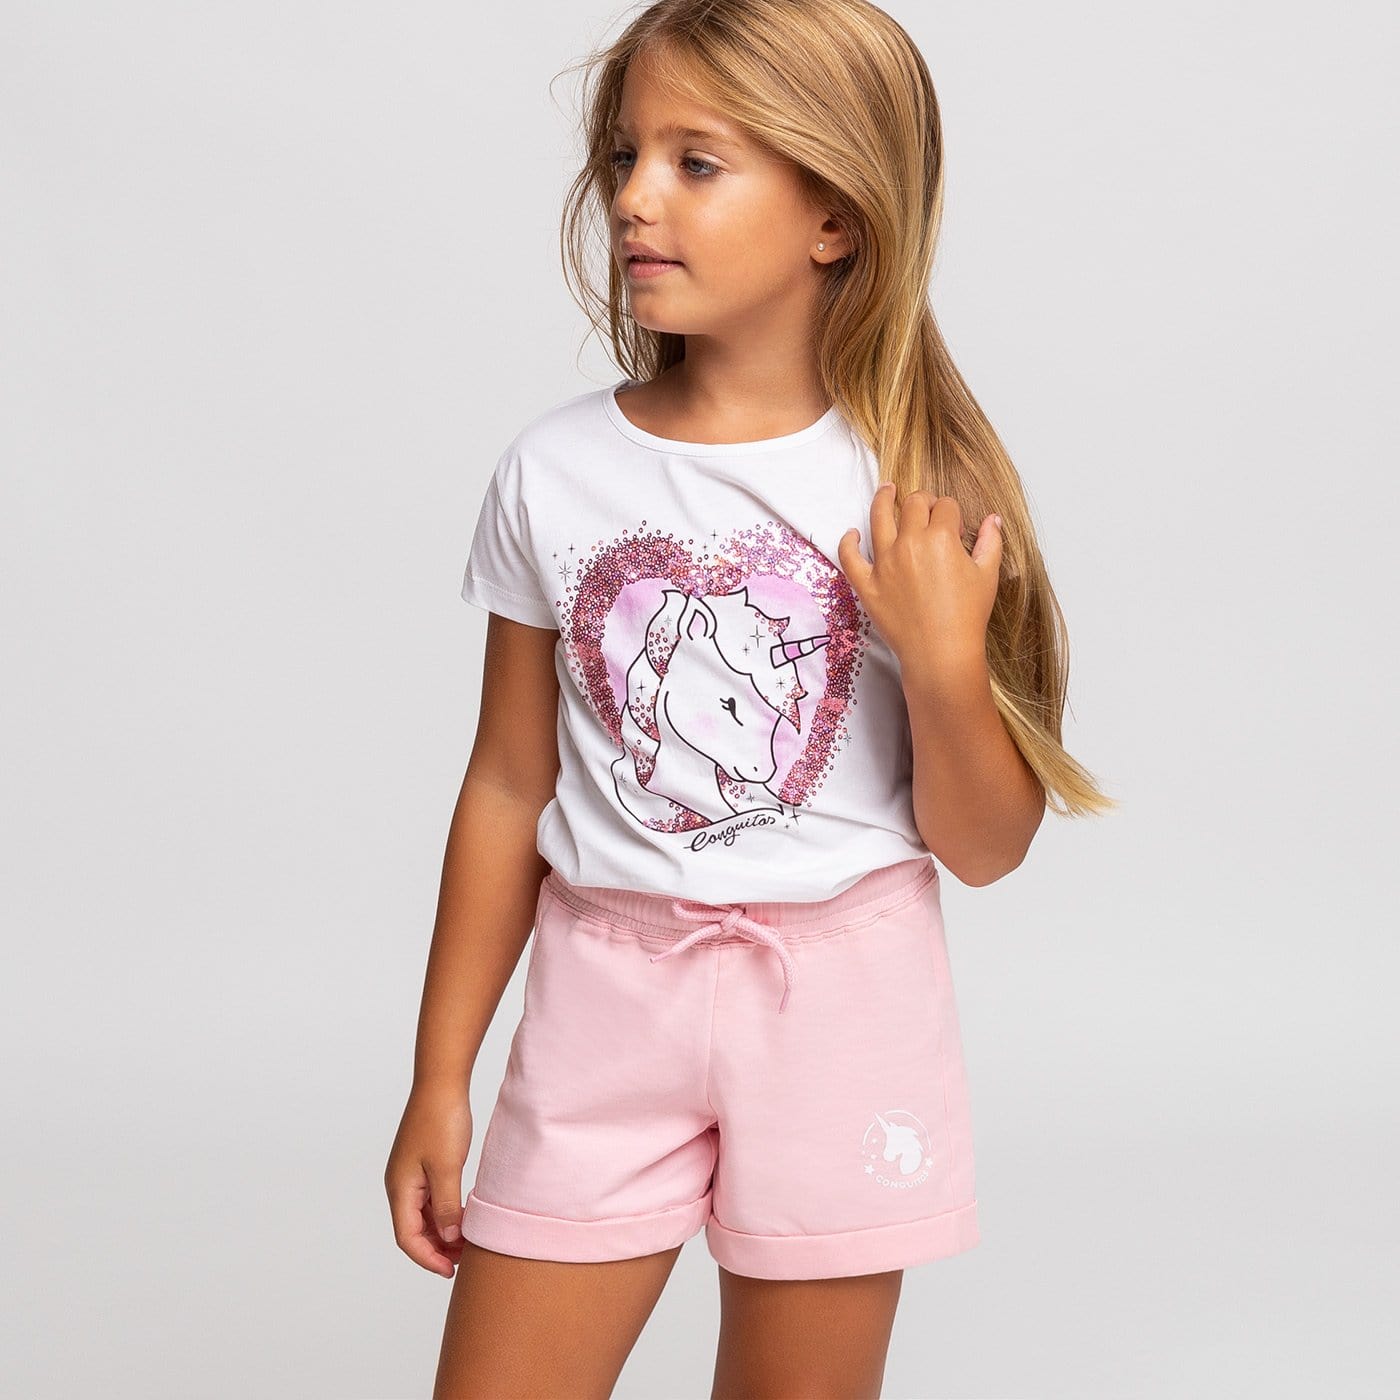 CONGUITOS TEXTIL Clothing Girl's Pink Running Shorts